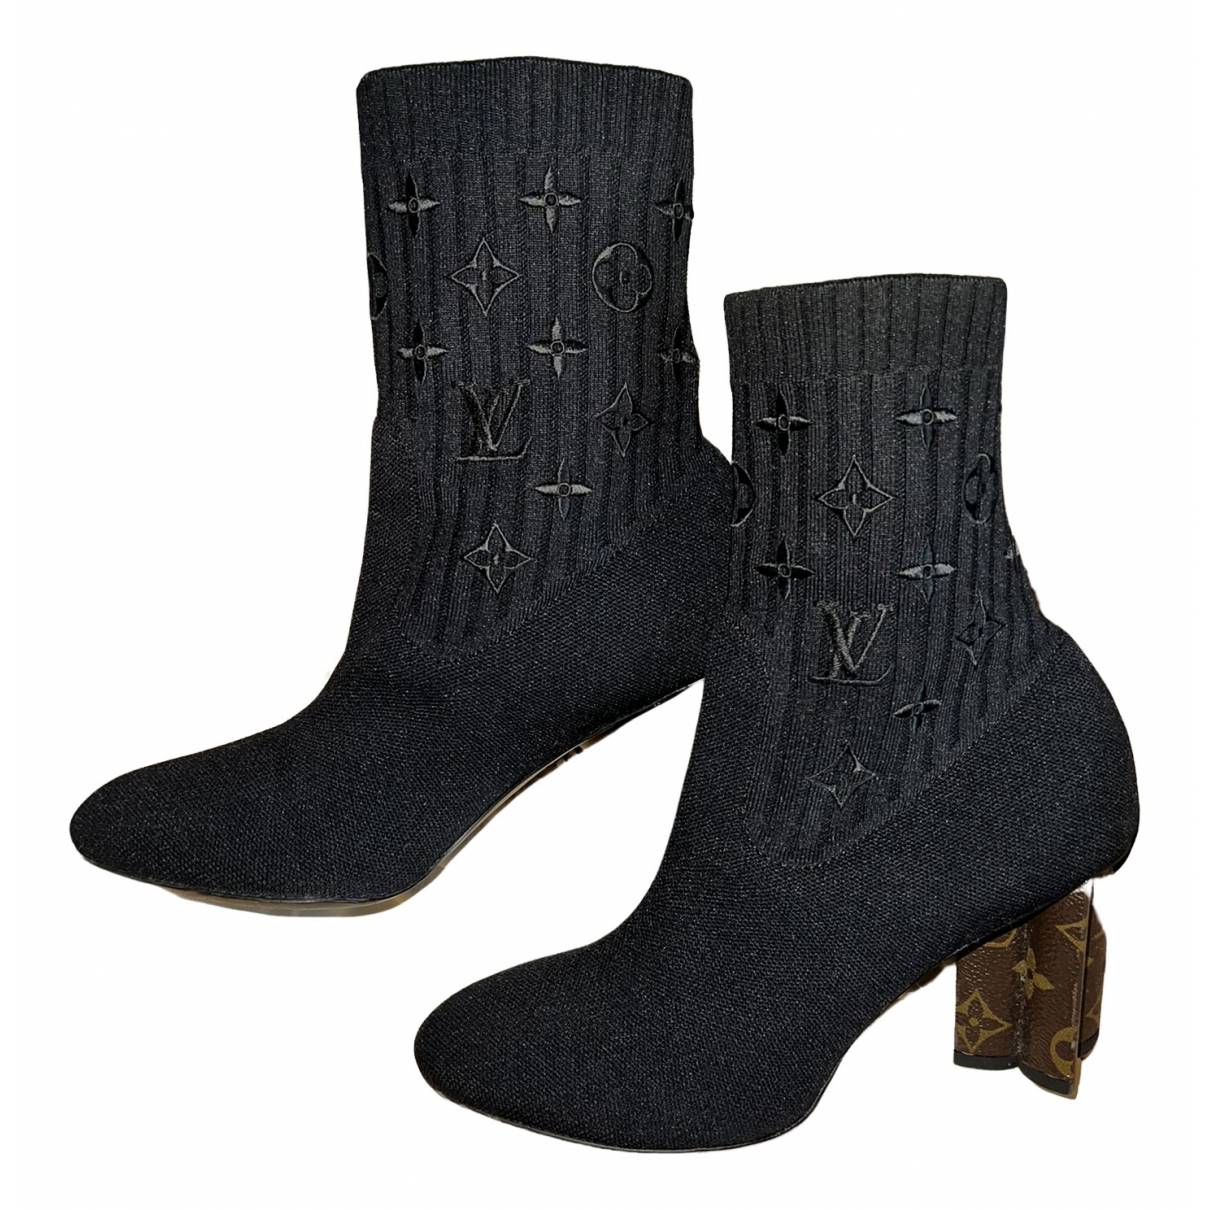 Silhouette Louis Vuitton Ankle boots for Women - Vestiaire Collective